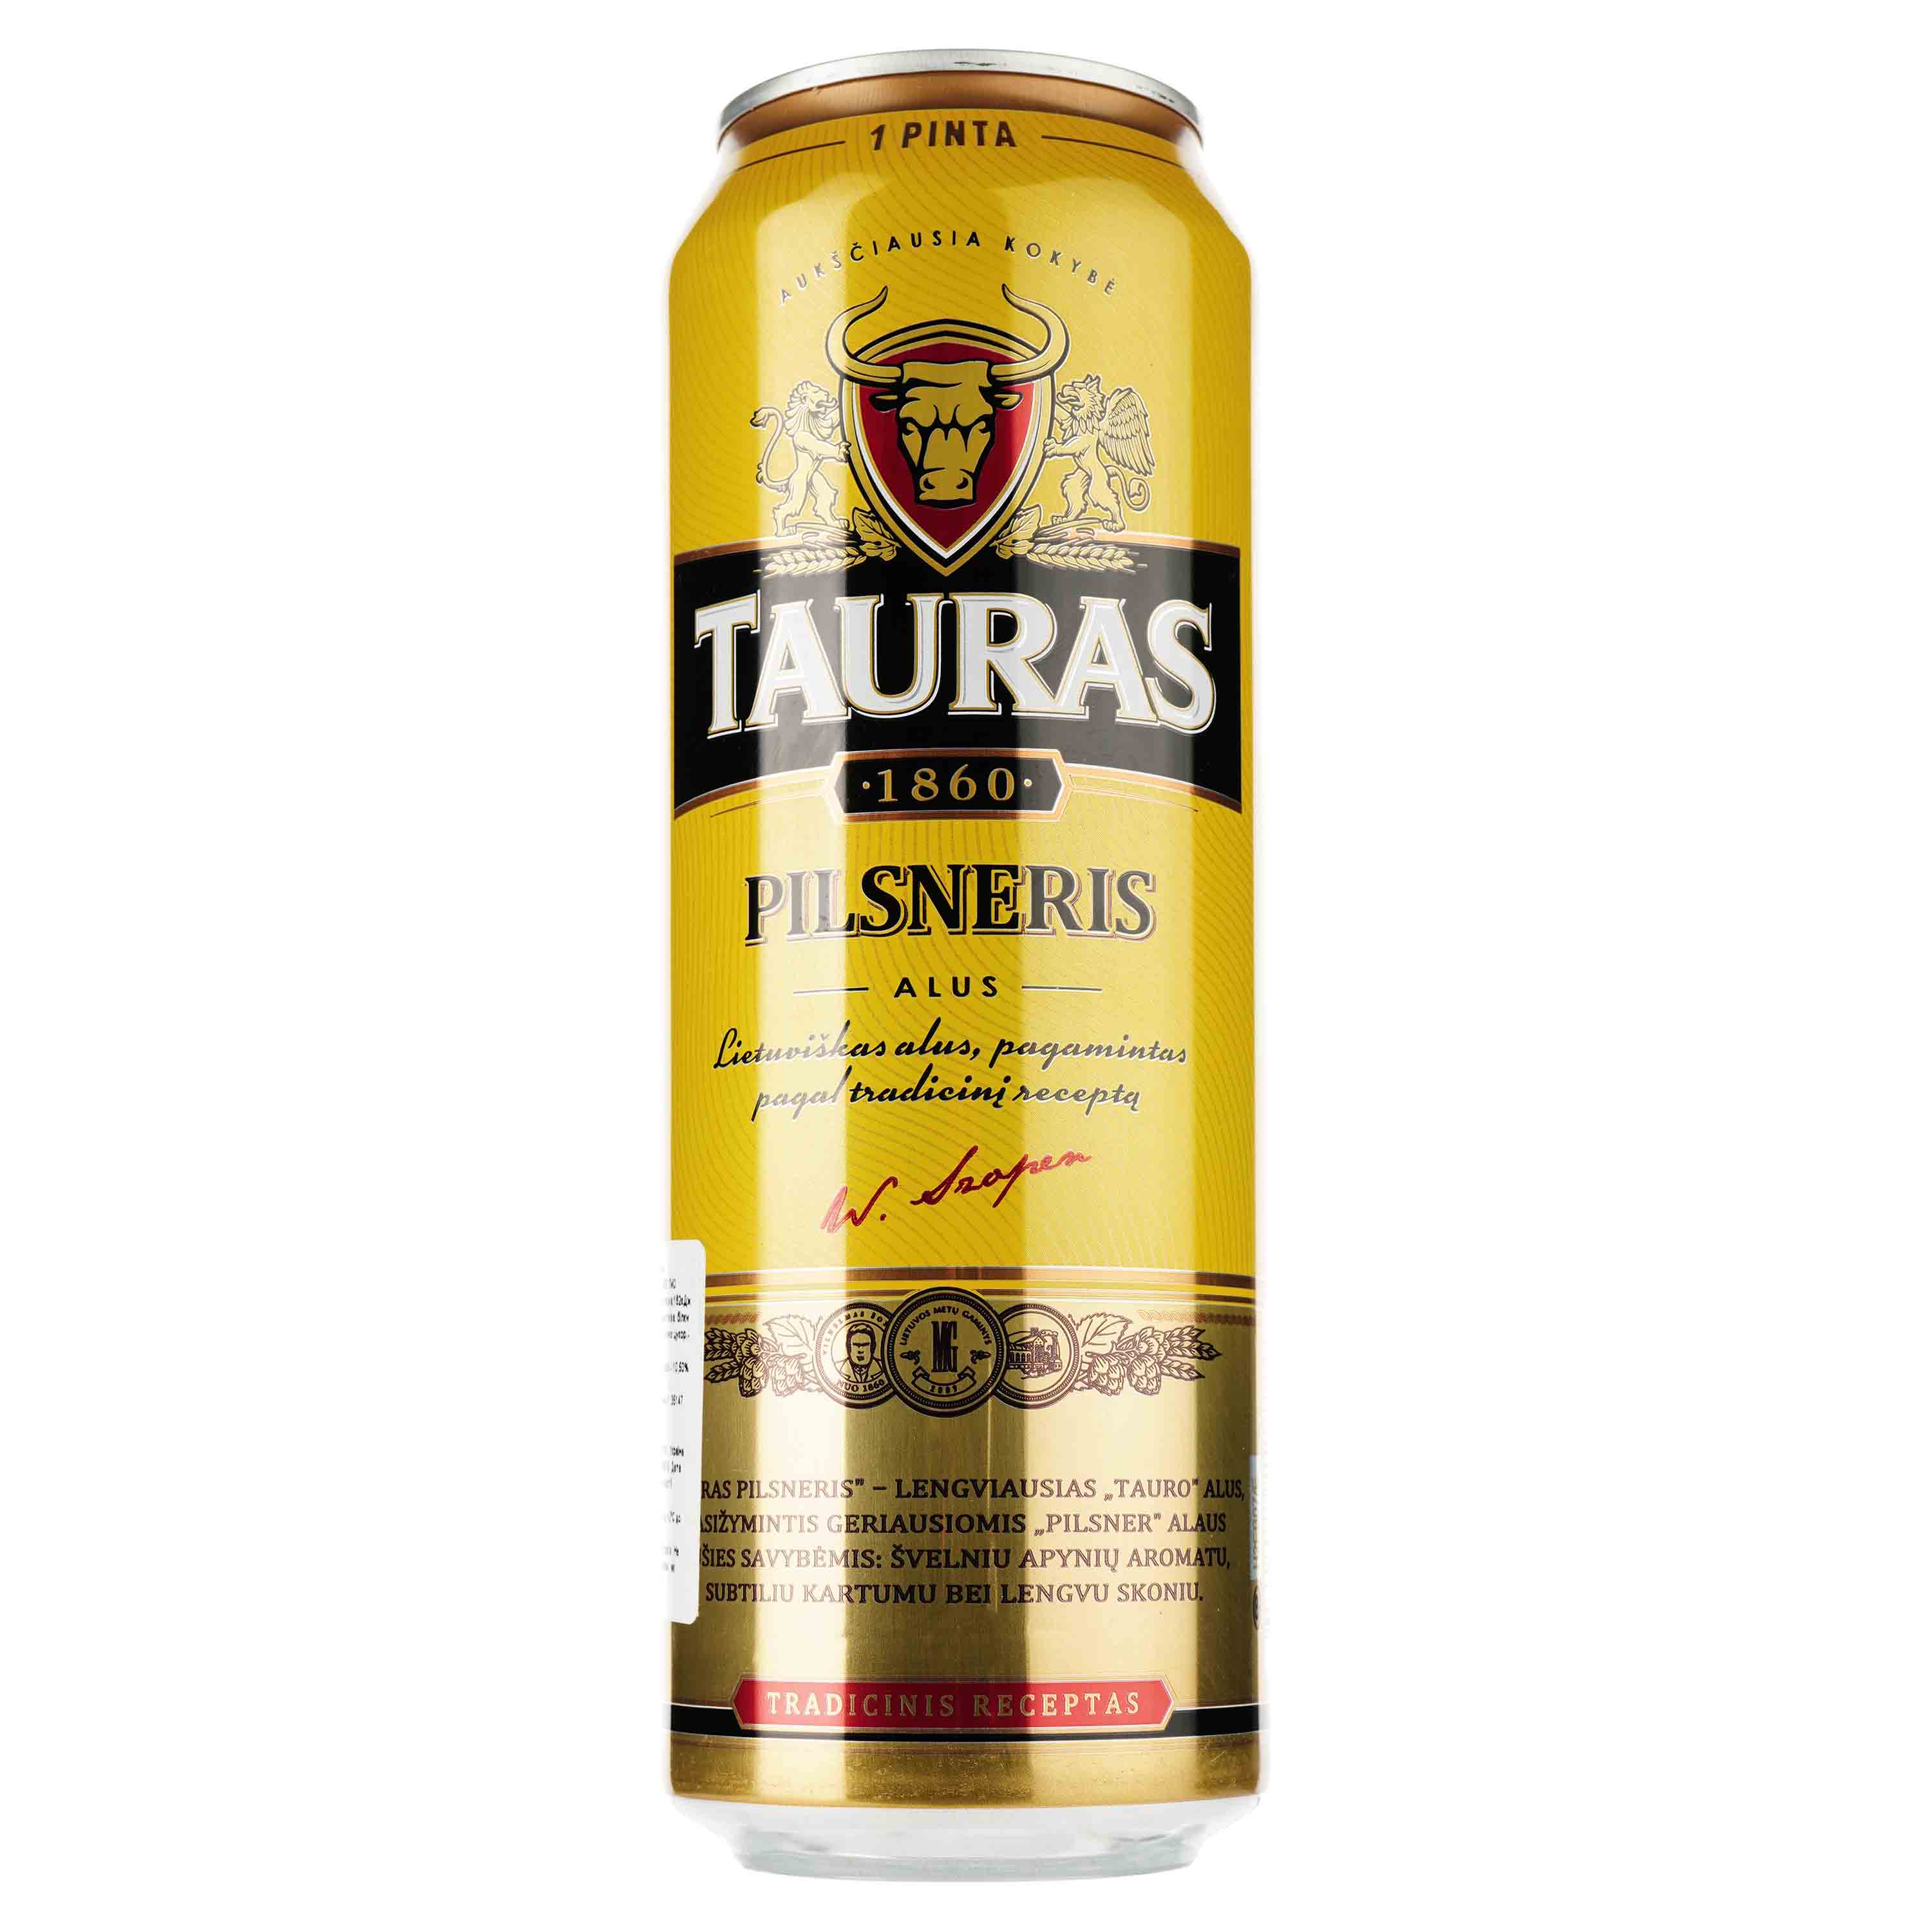 Пиво Tauras Pilsneris светлое, 4.6%, ж/б, 0.568 л - фото 1